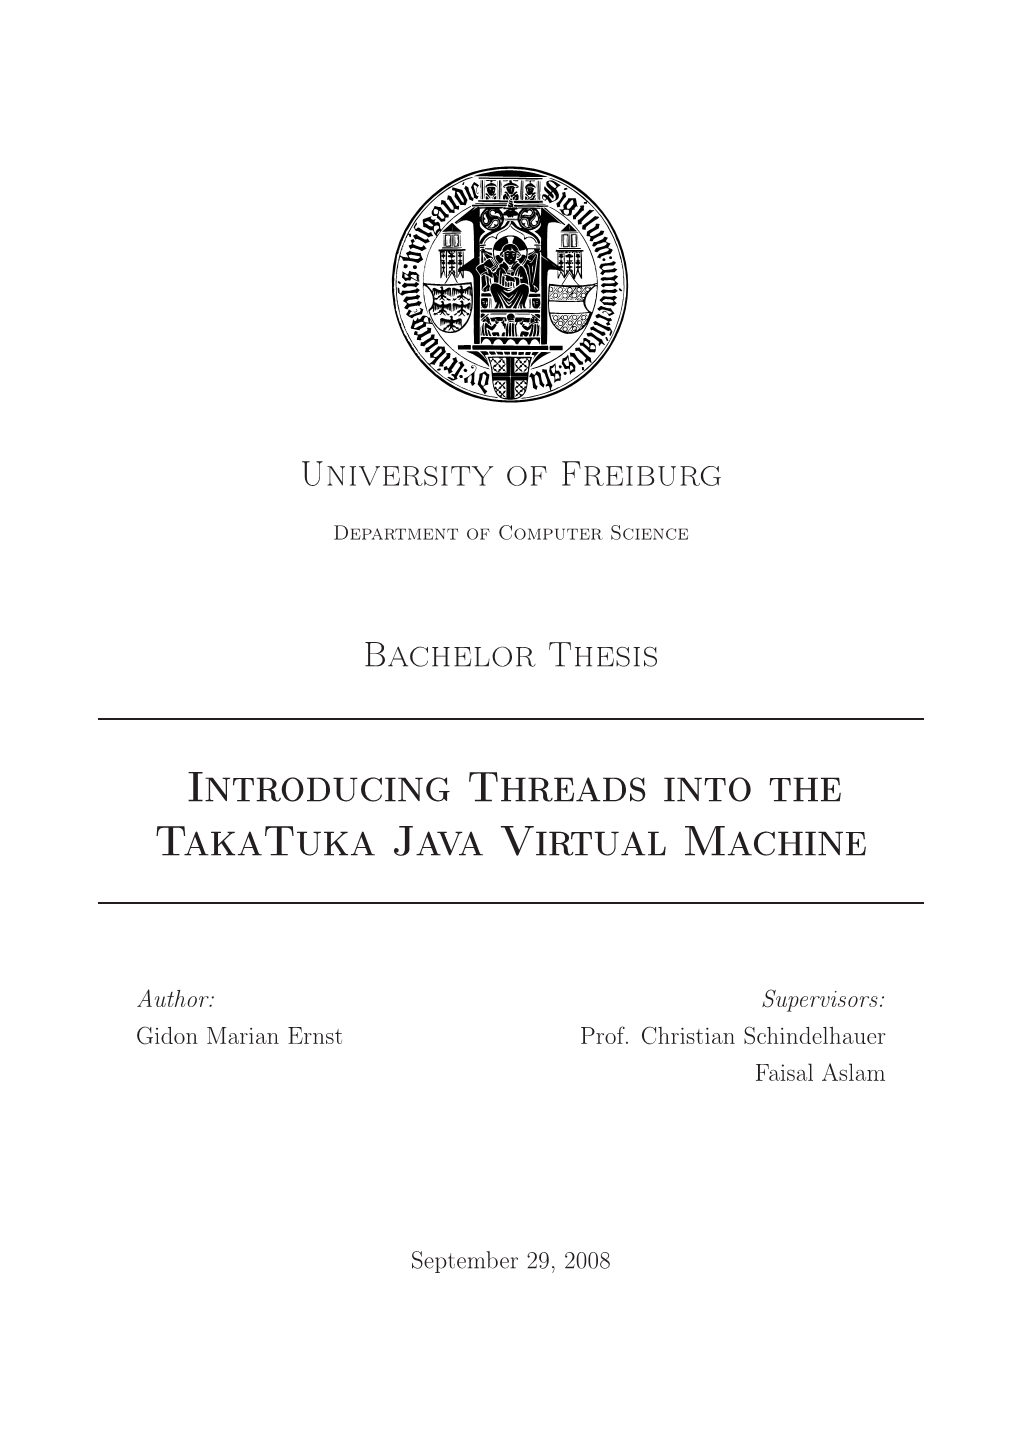 Introducing Threads Into the Takatuka Java Virtual Machine